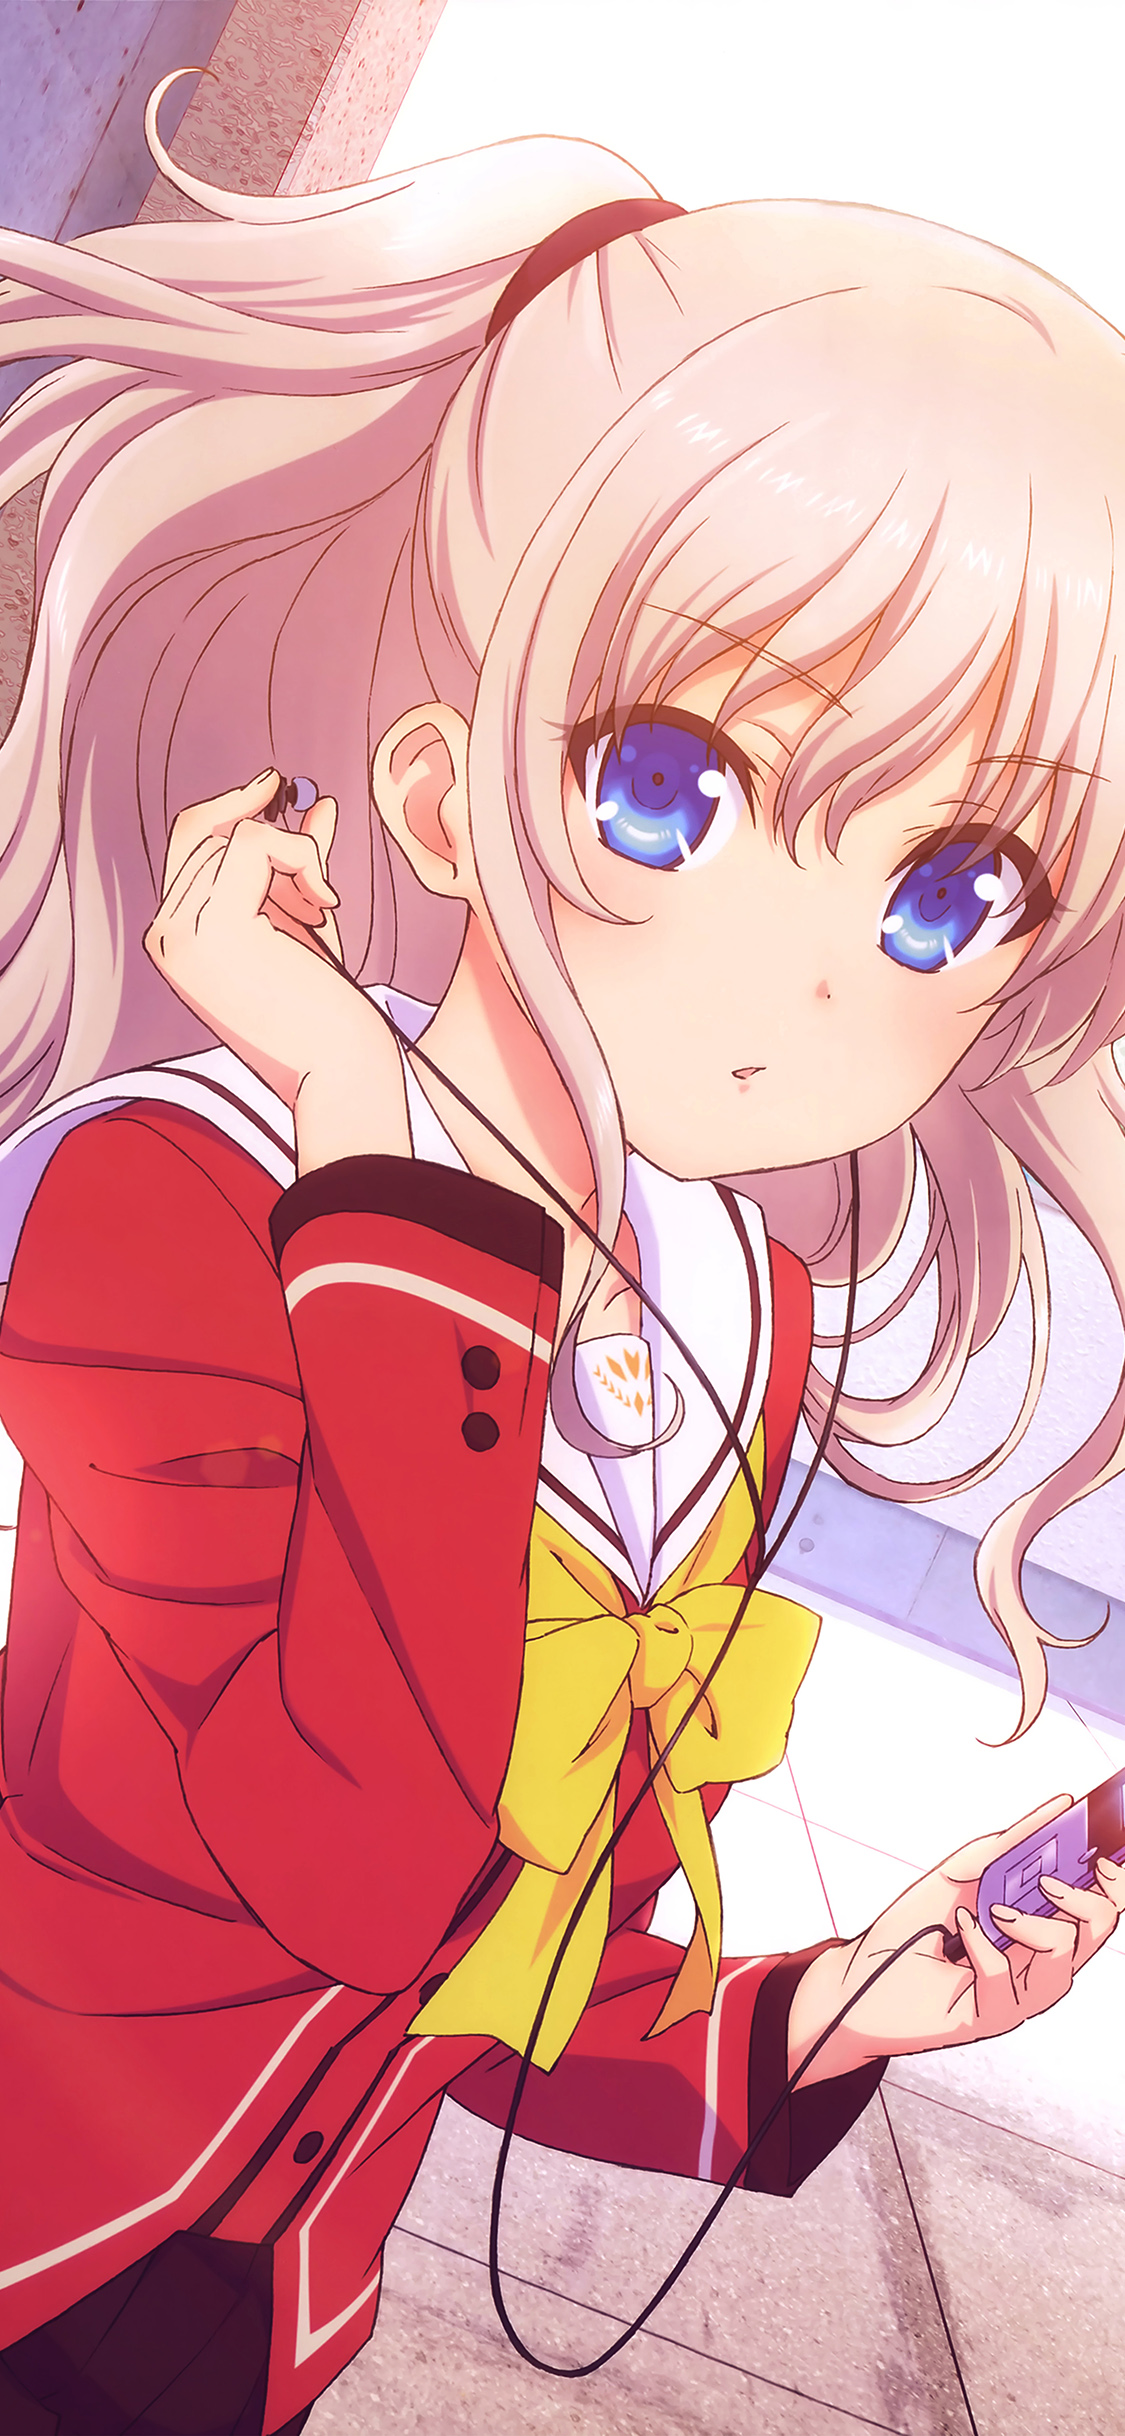 Cute Anime Girl Iphone Wallpaper Hd gambar ke 12